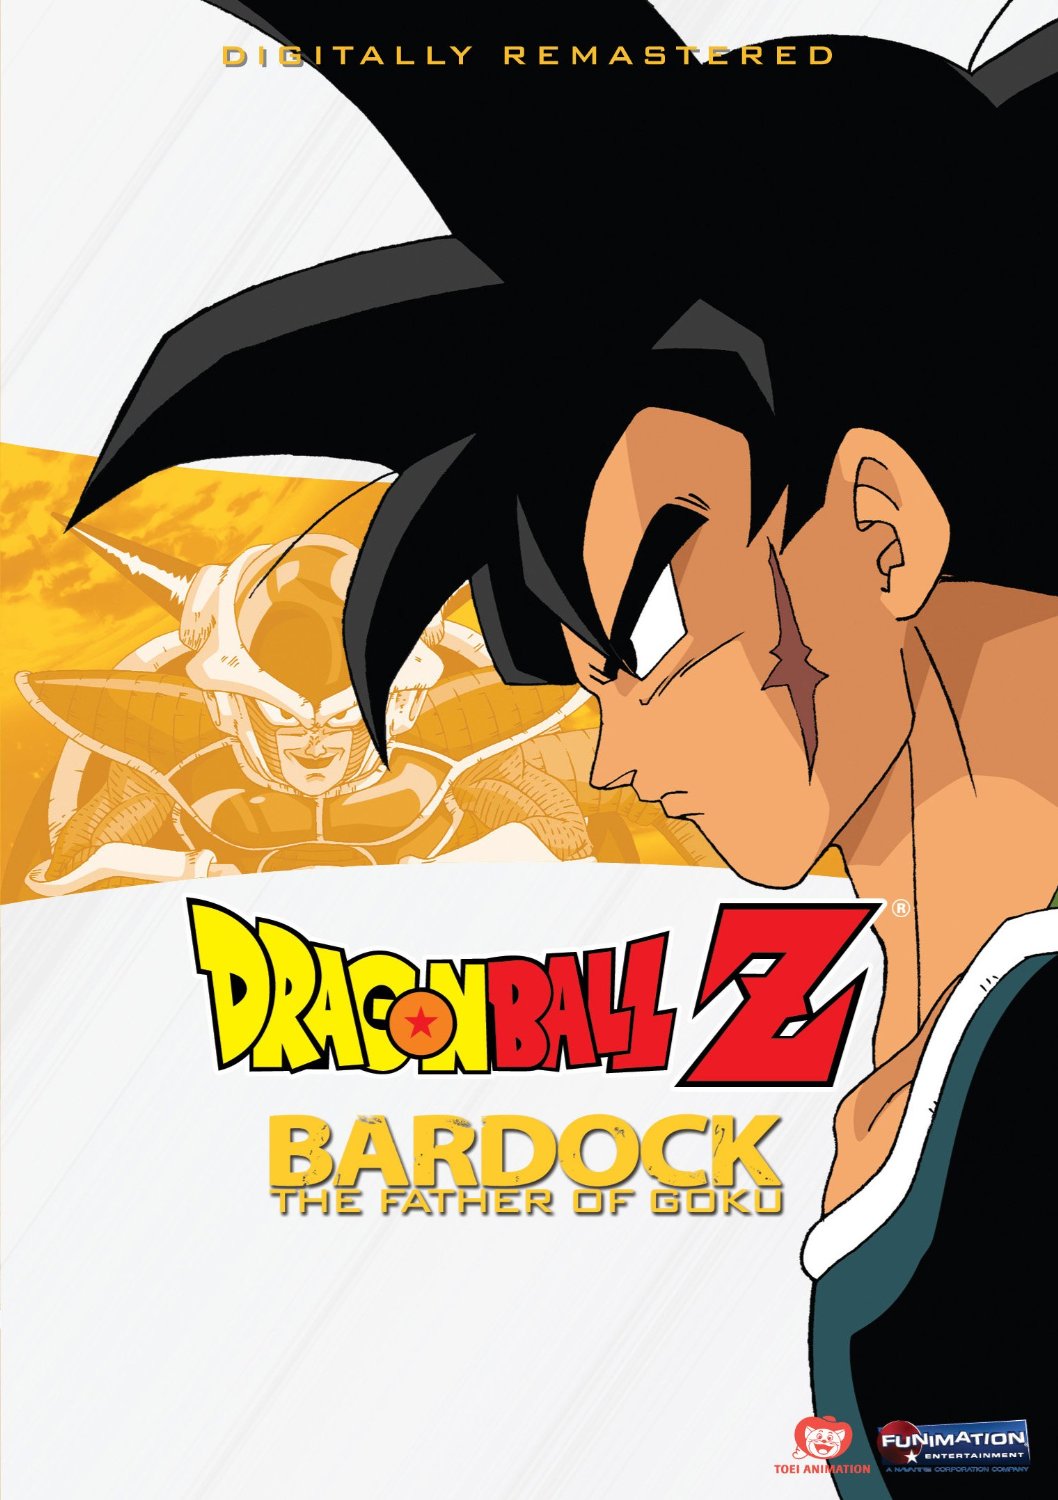 Dragon Ball Z (1989) - Anime - AniDB